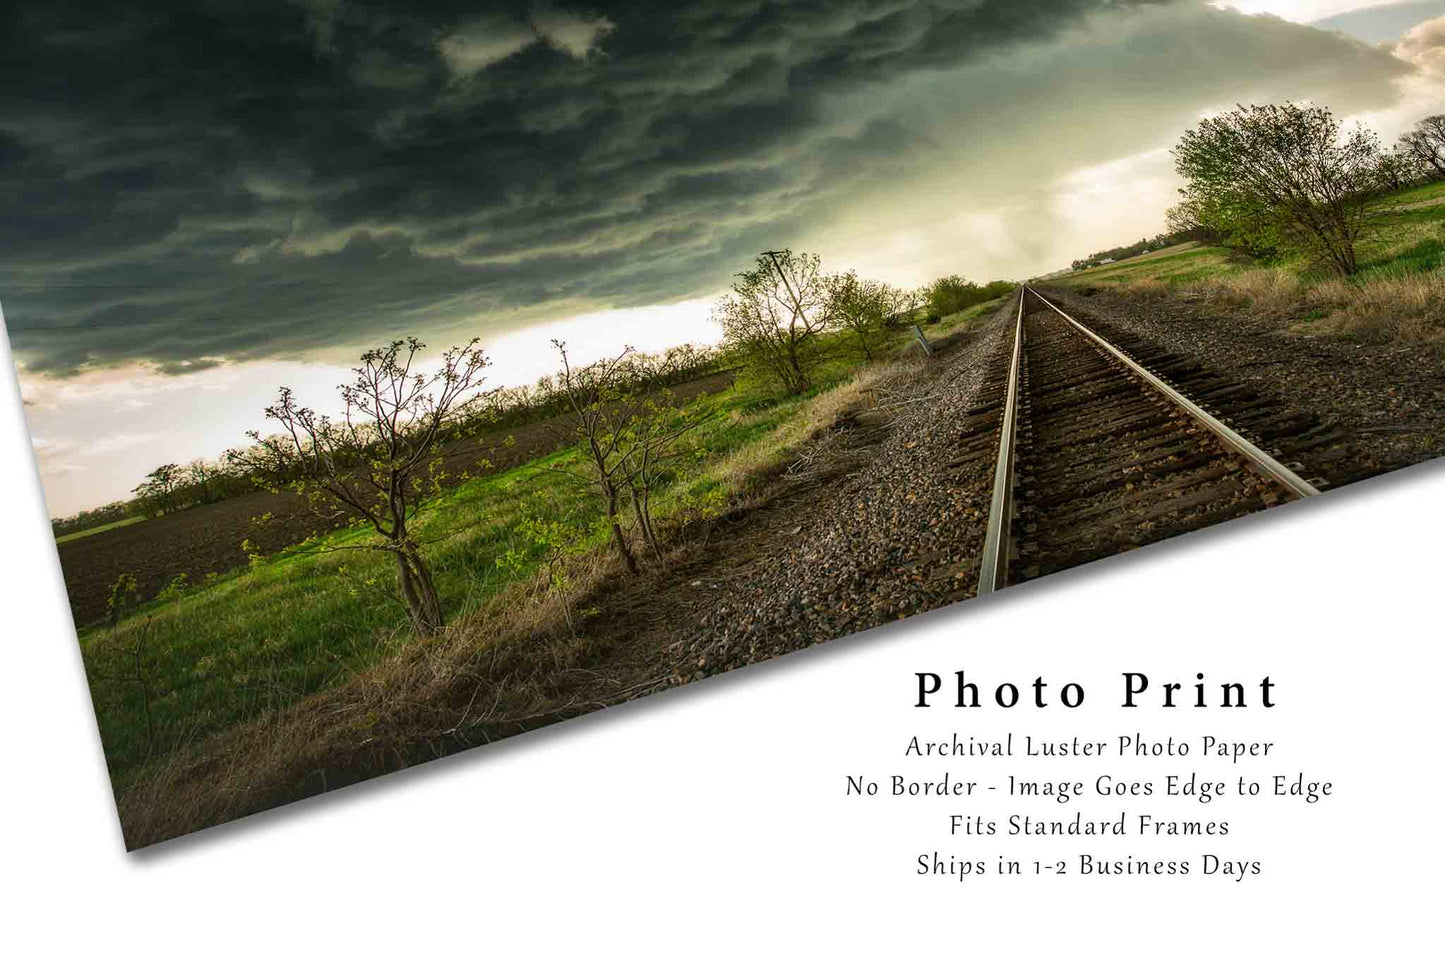 Storm Photography Print | Thunderstorm Picture | Train Tracks Wall Art | Kansas Photo | Railroad Decor | Not Framed